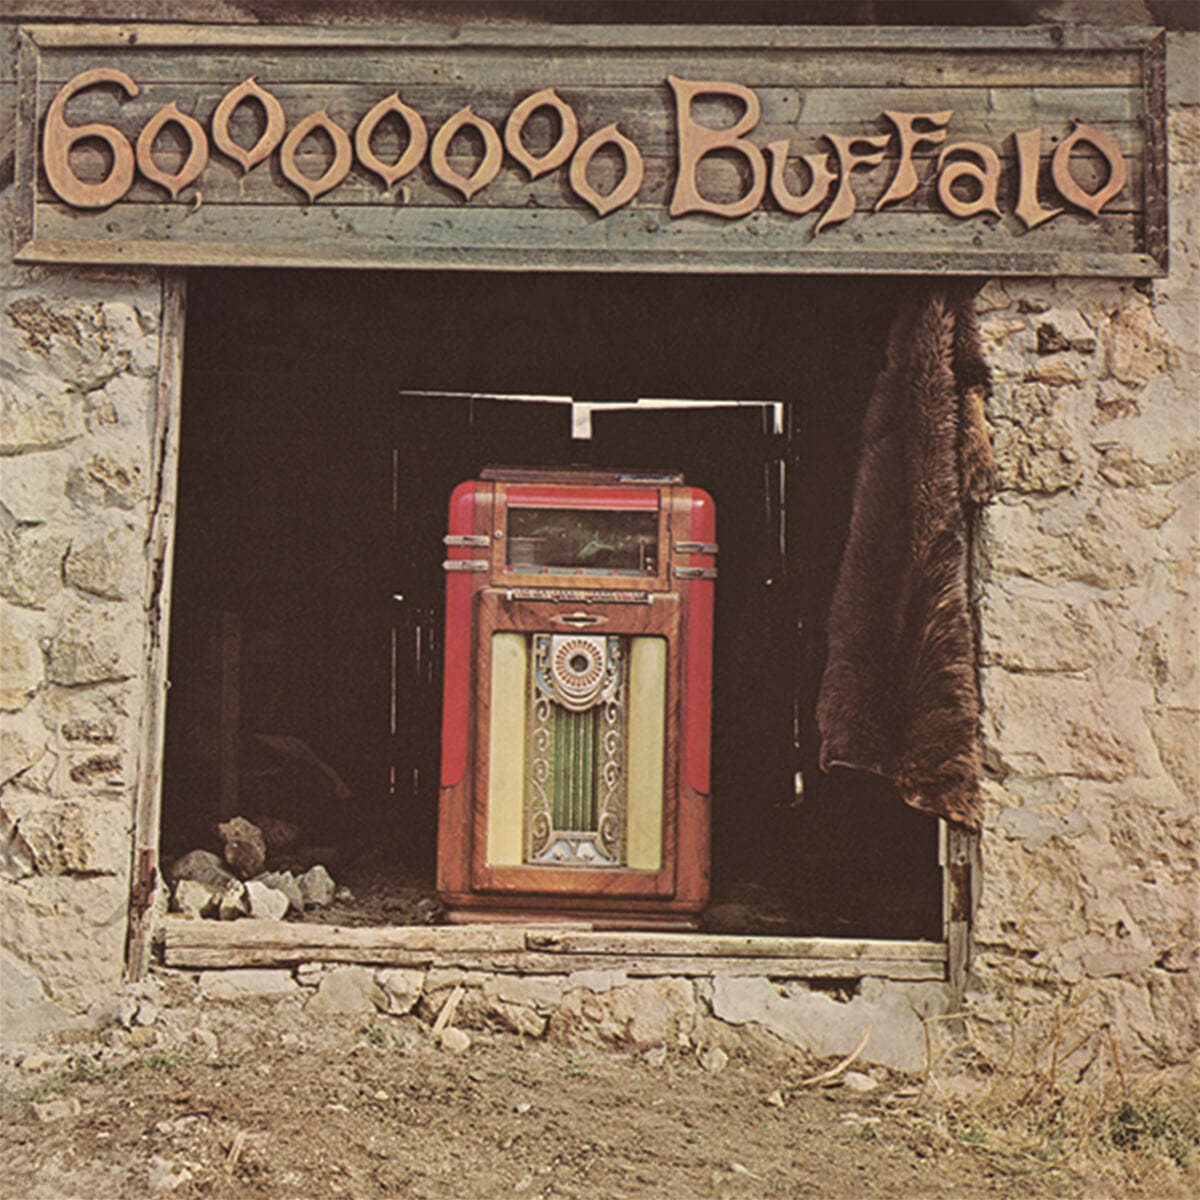 60,000,000 Buffalo (60,000,000 버팔로) - Nevada Jukebox